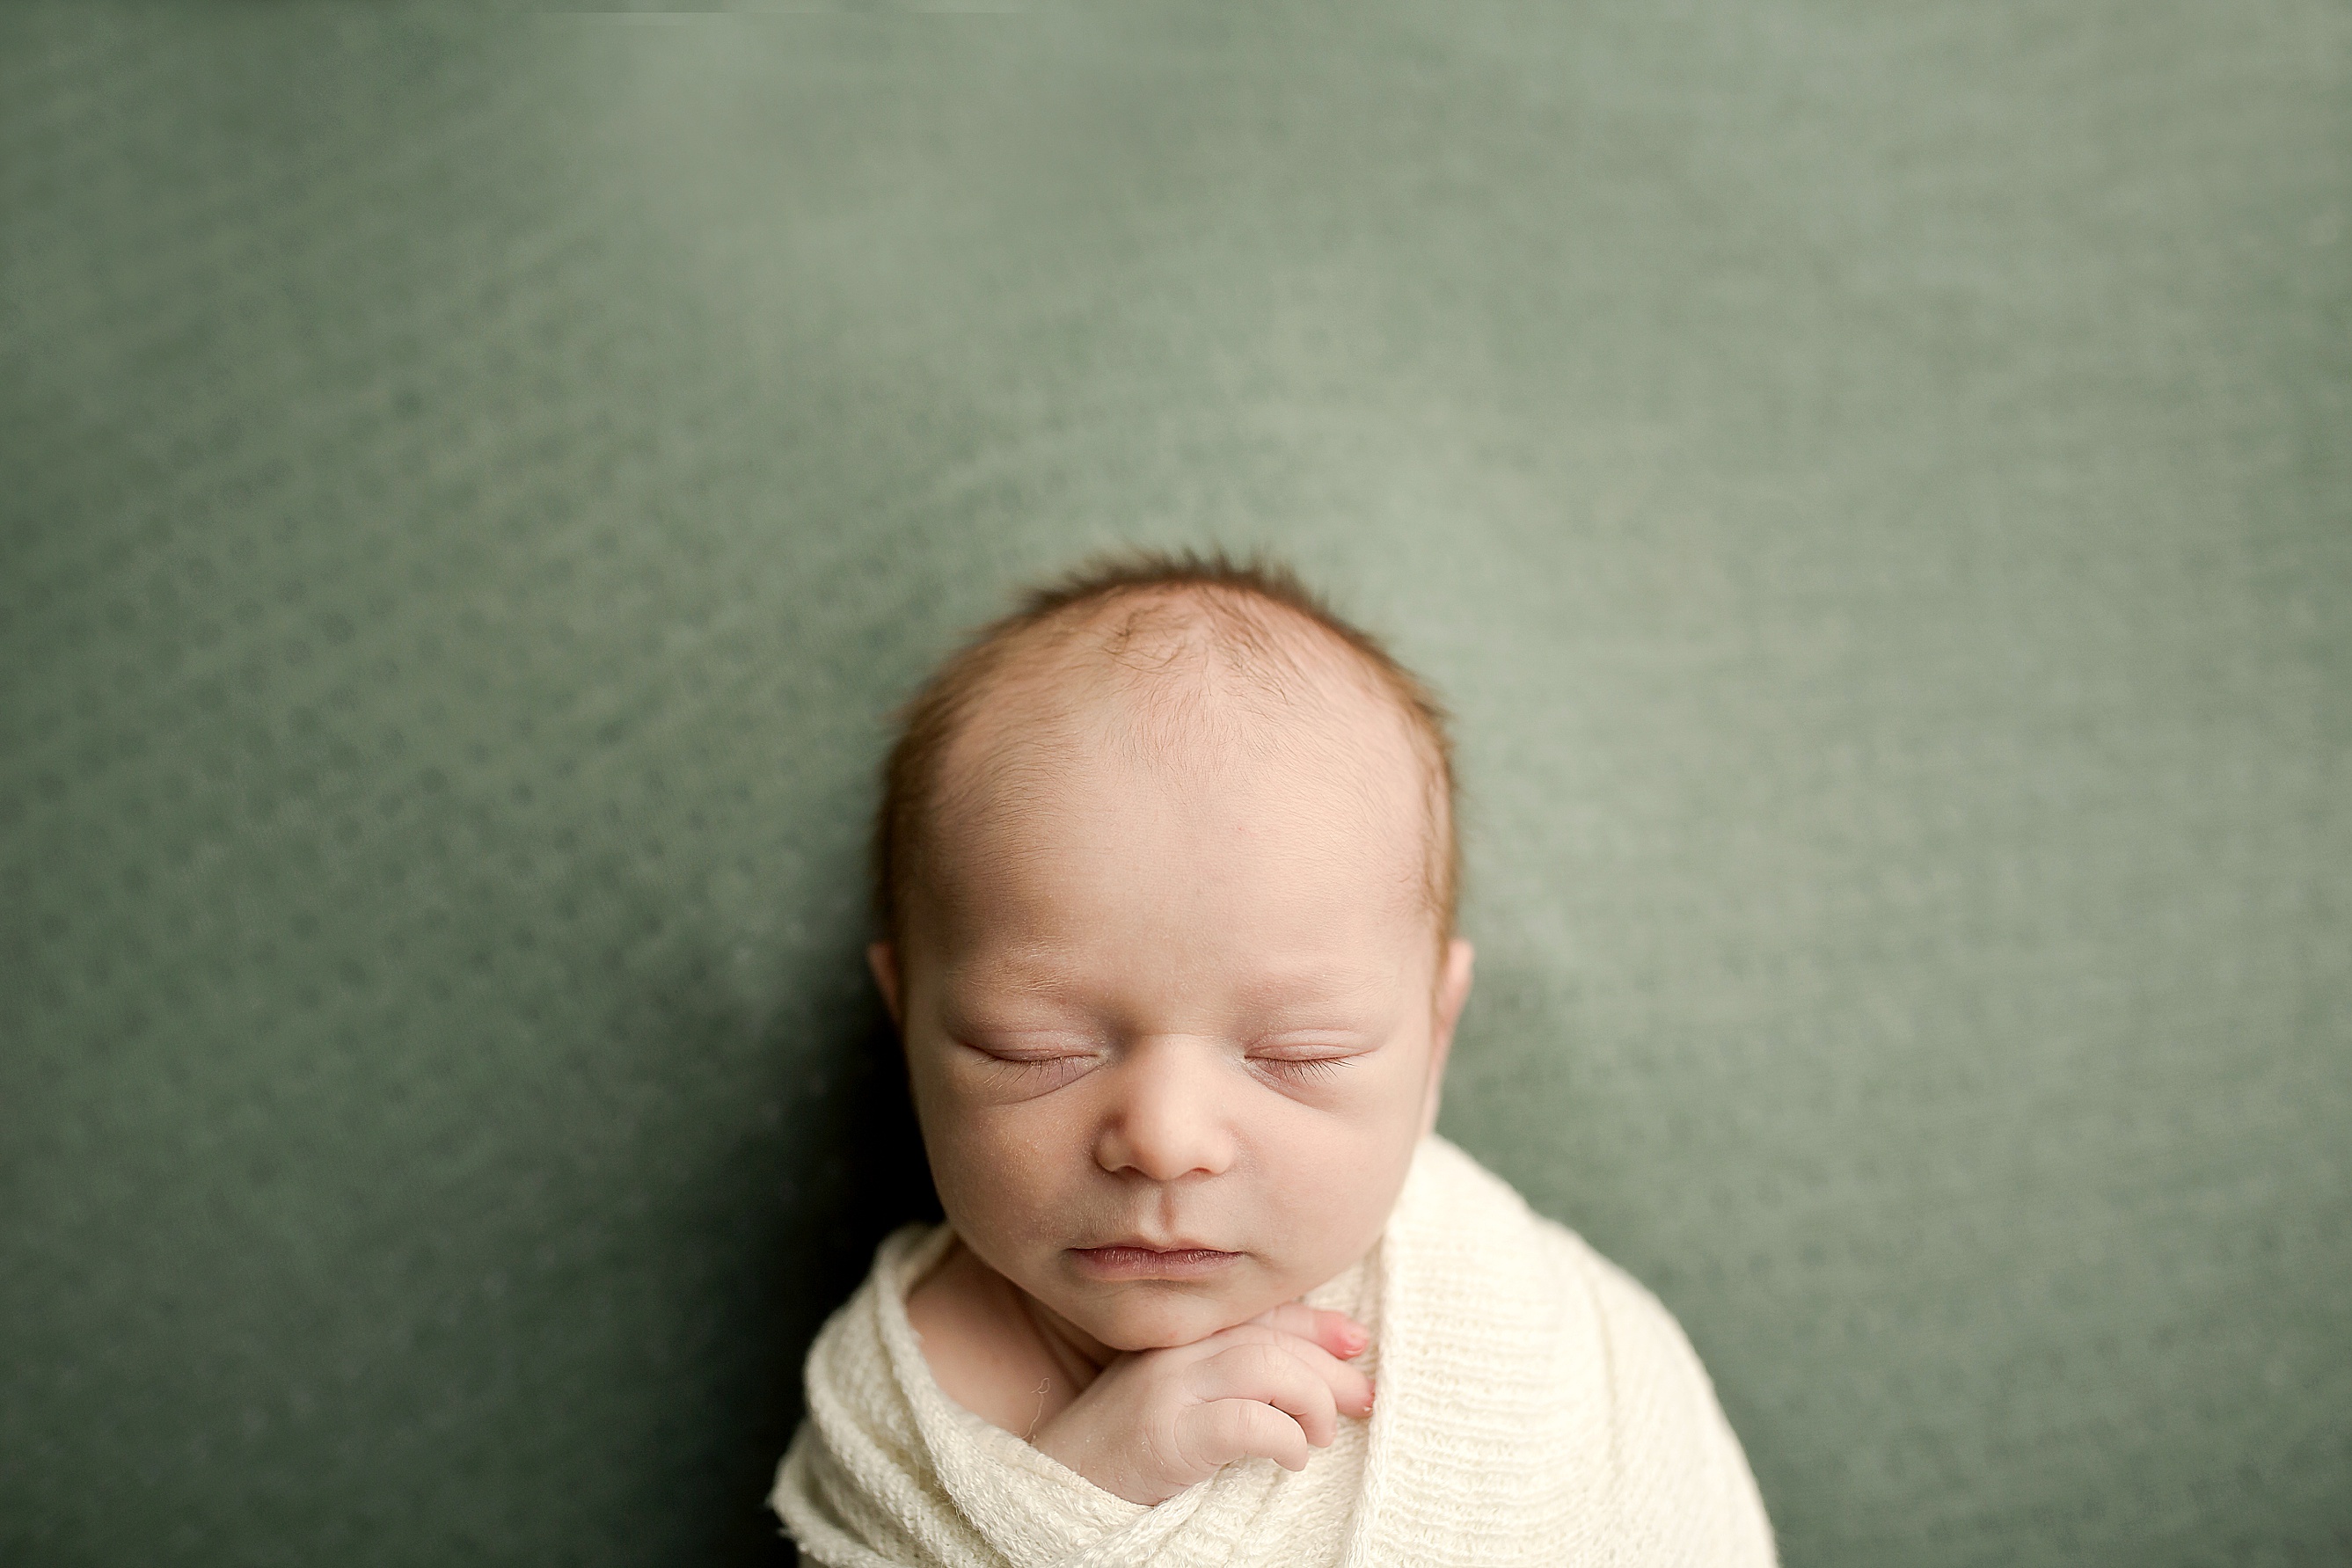 Fairbury IL Newborn Photographer | Chandi Kesler Photography